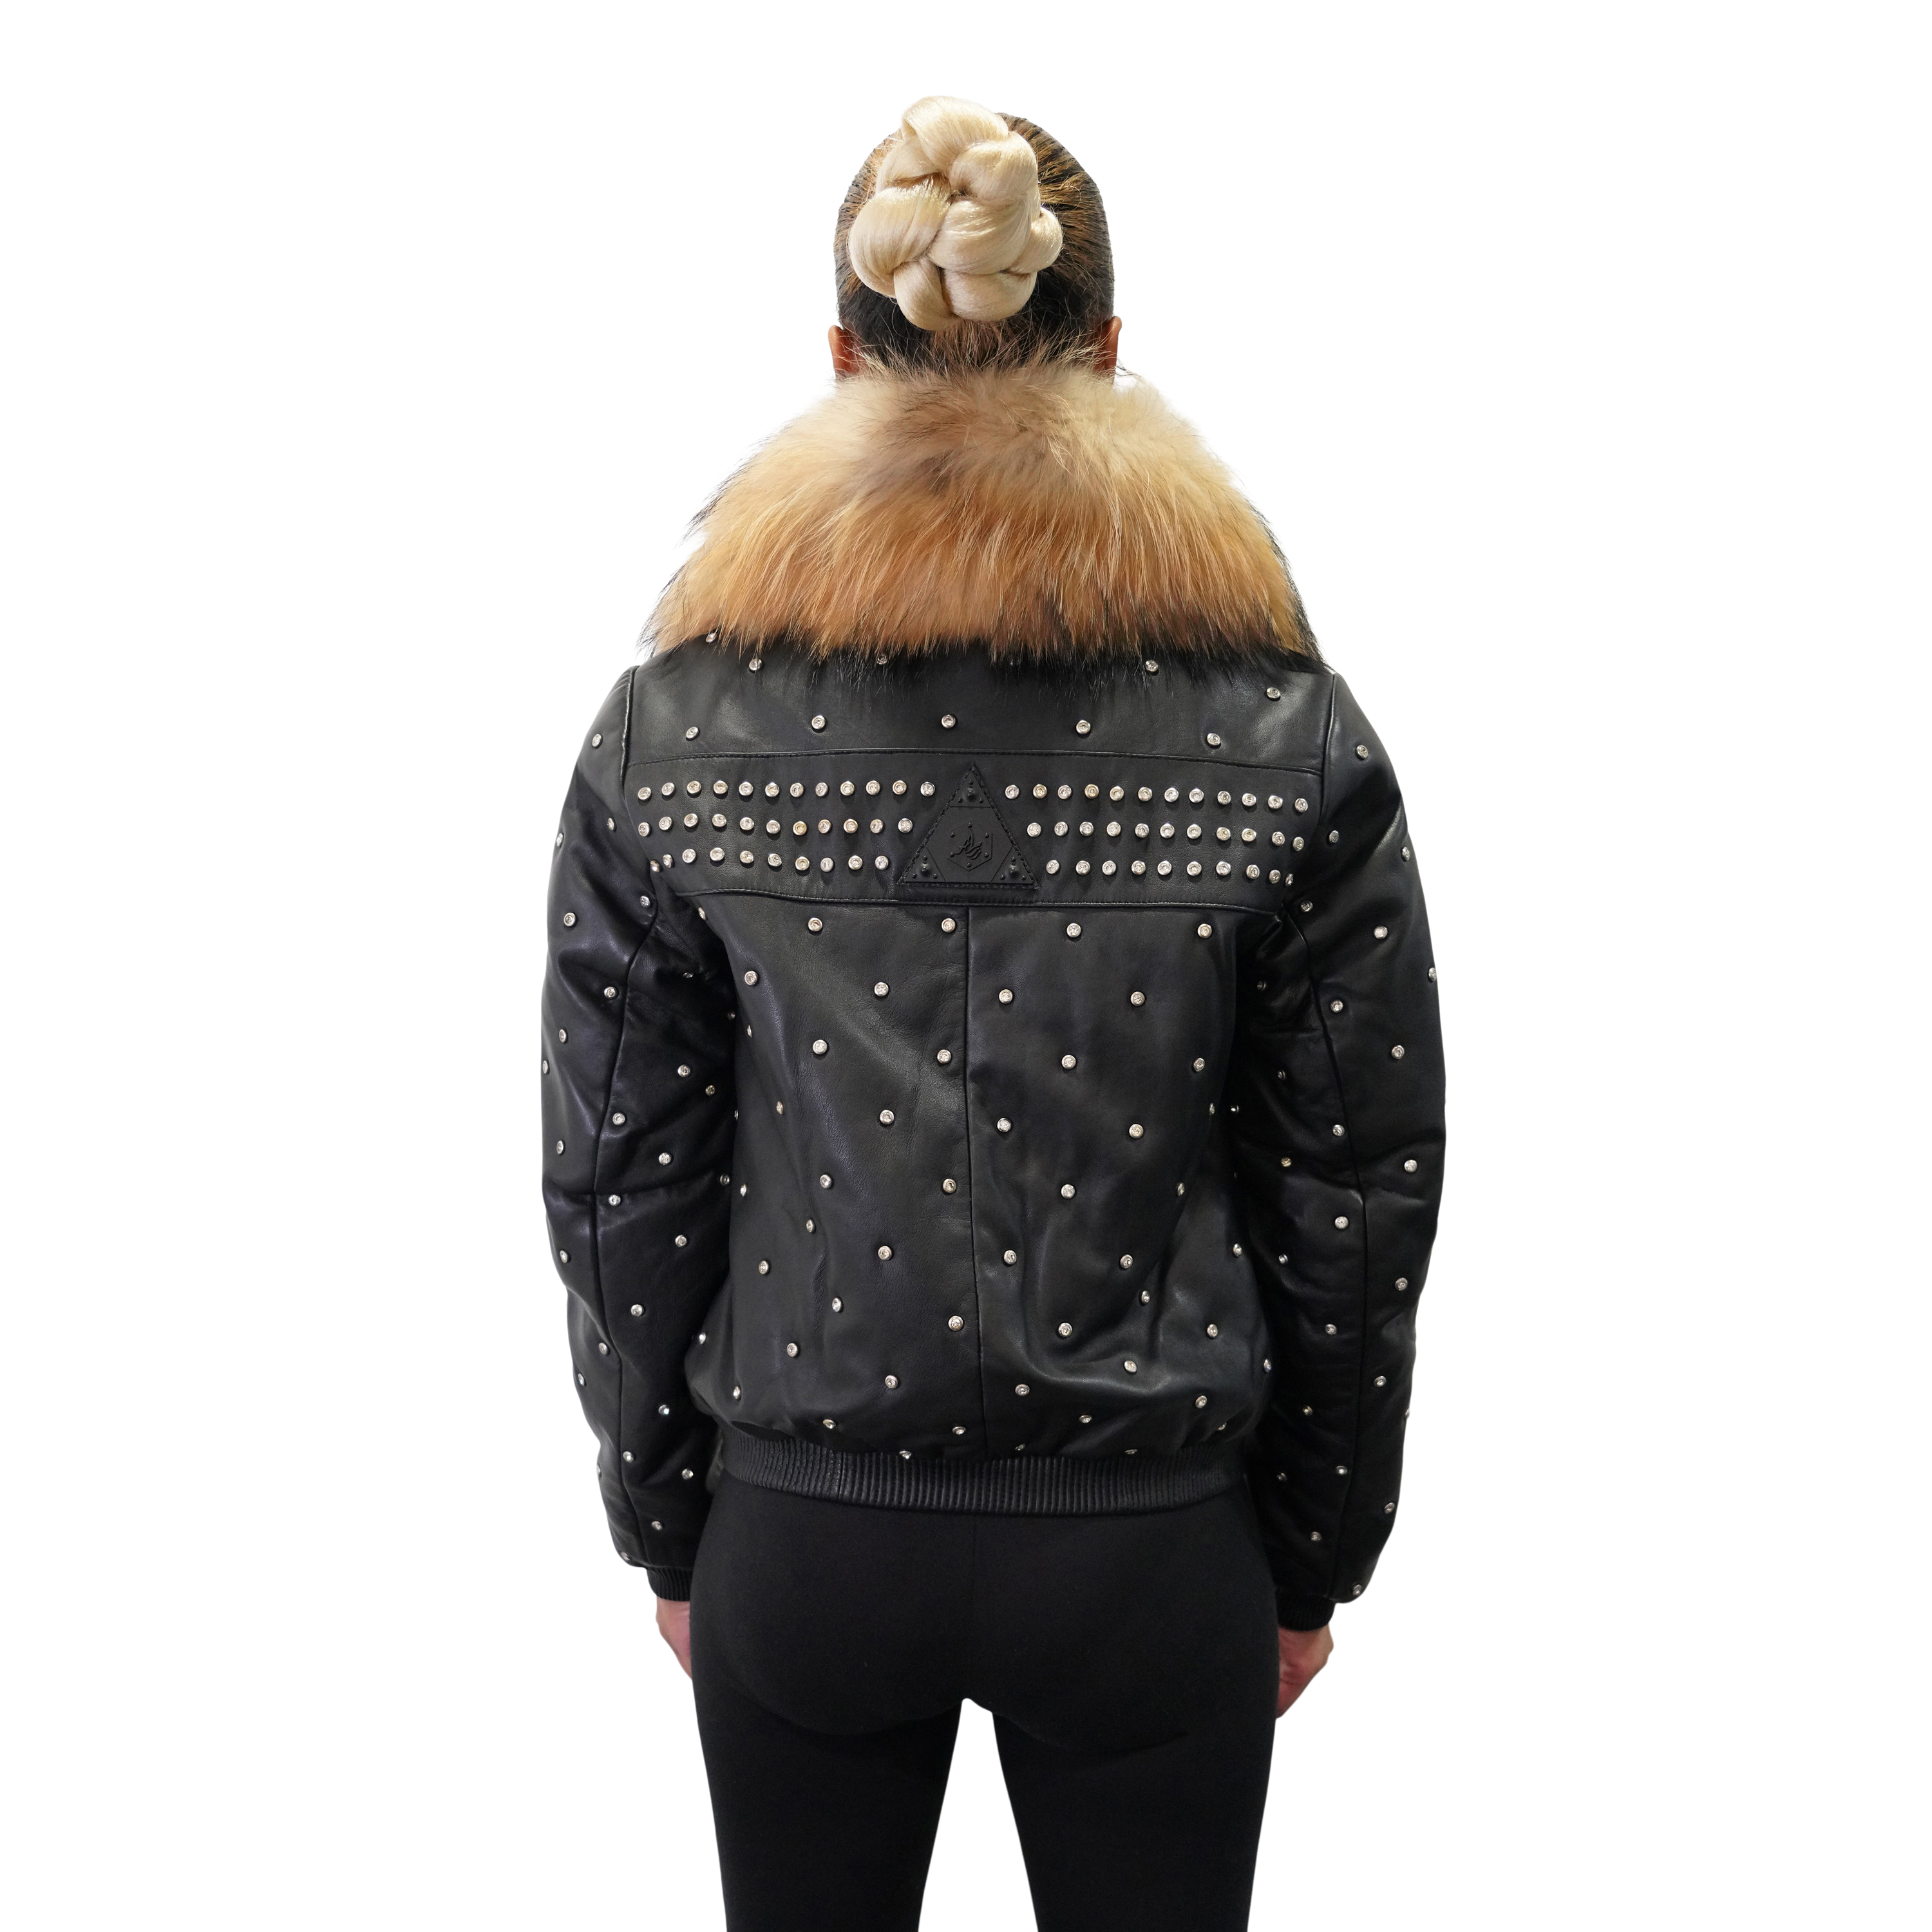 Studded Fur-Collar Women's Leather Jacket